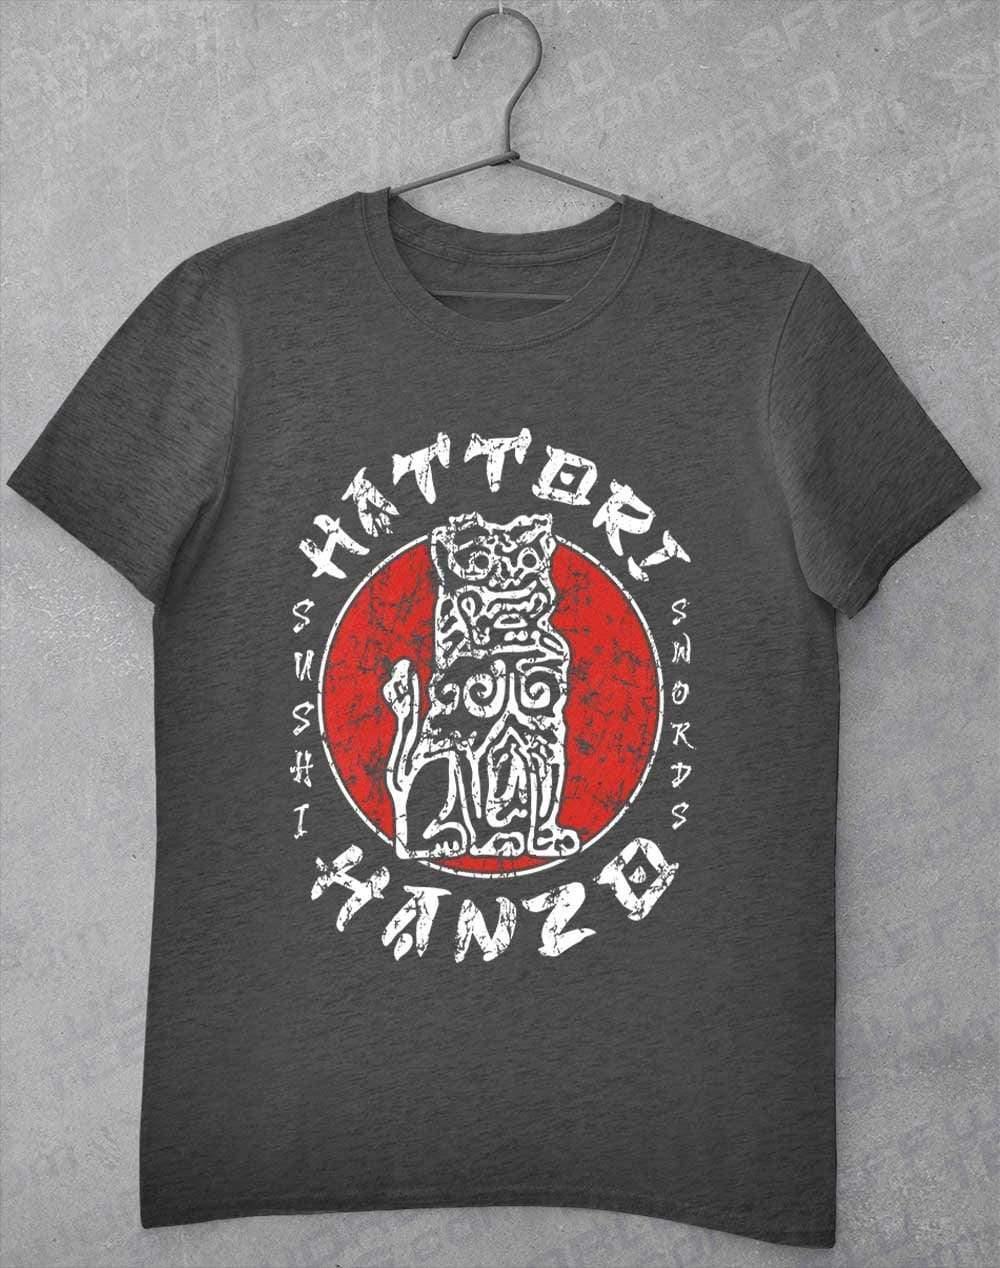 Hattori Hanzo T-Shirt S / Dark Heather  - Off World Tees